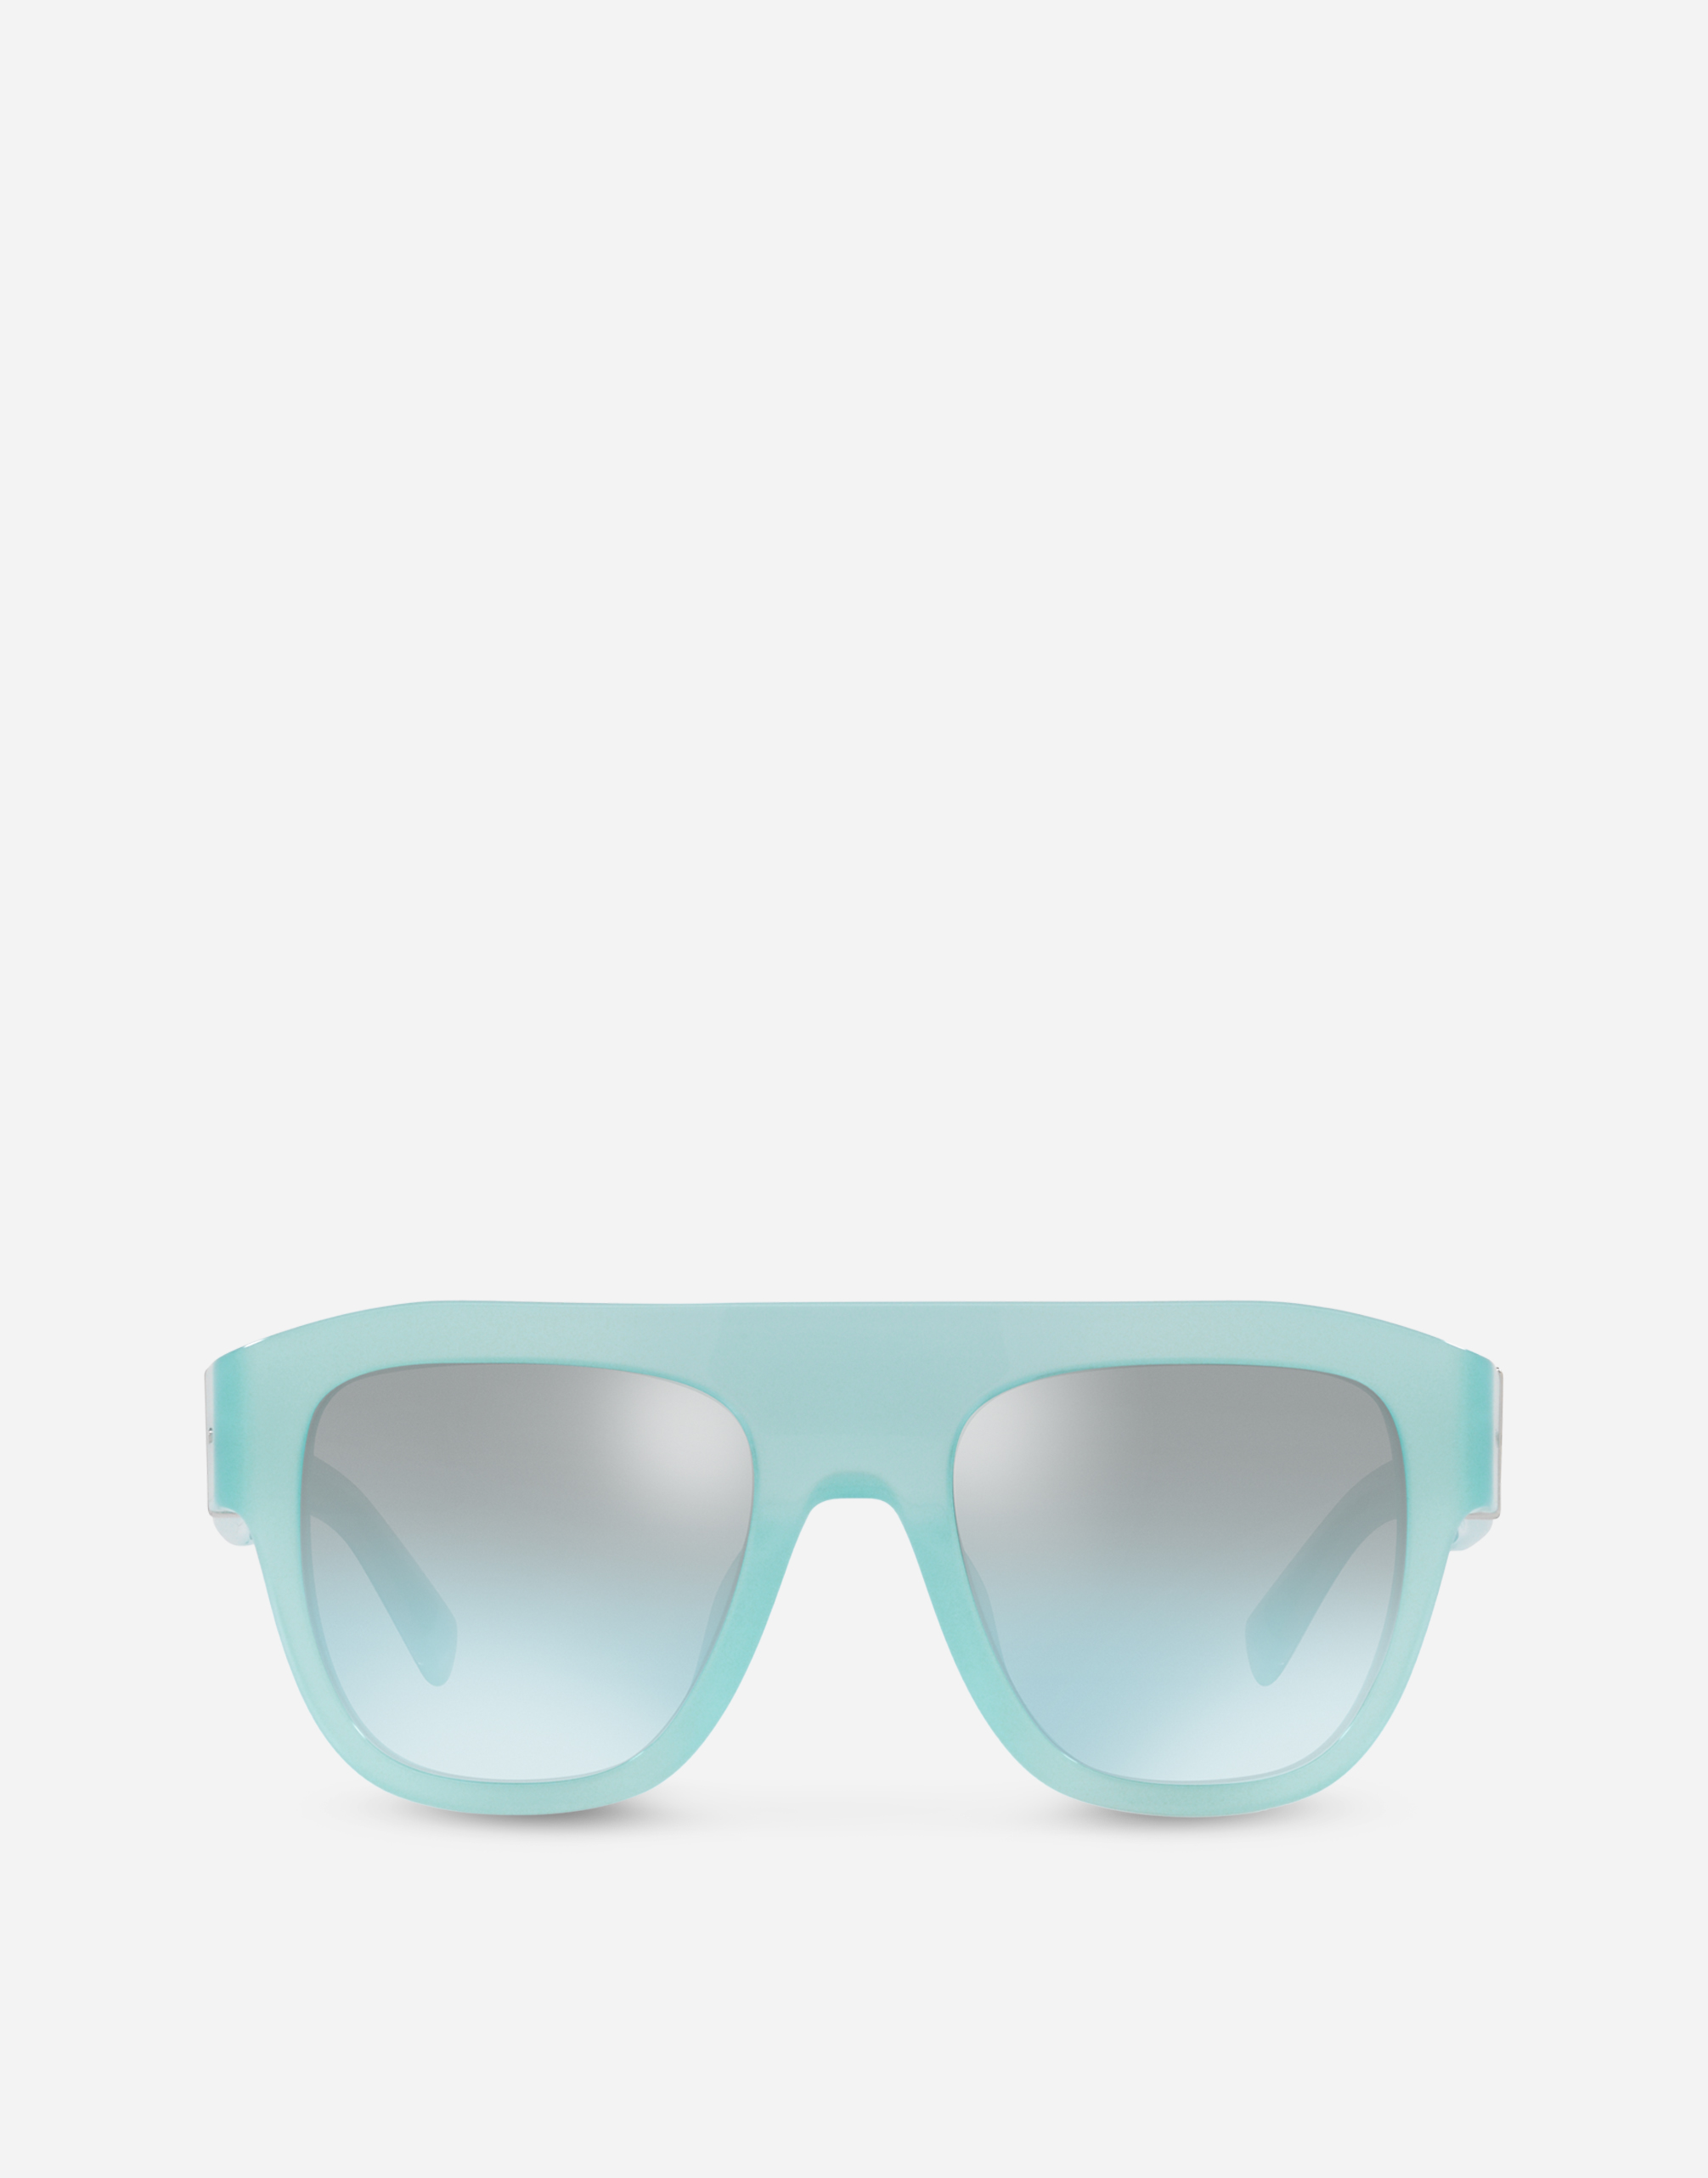 Renaissance sunglasses in Opal light blue